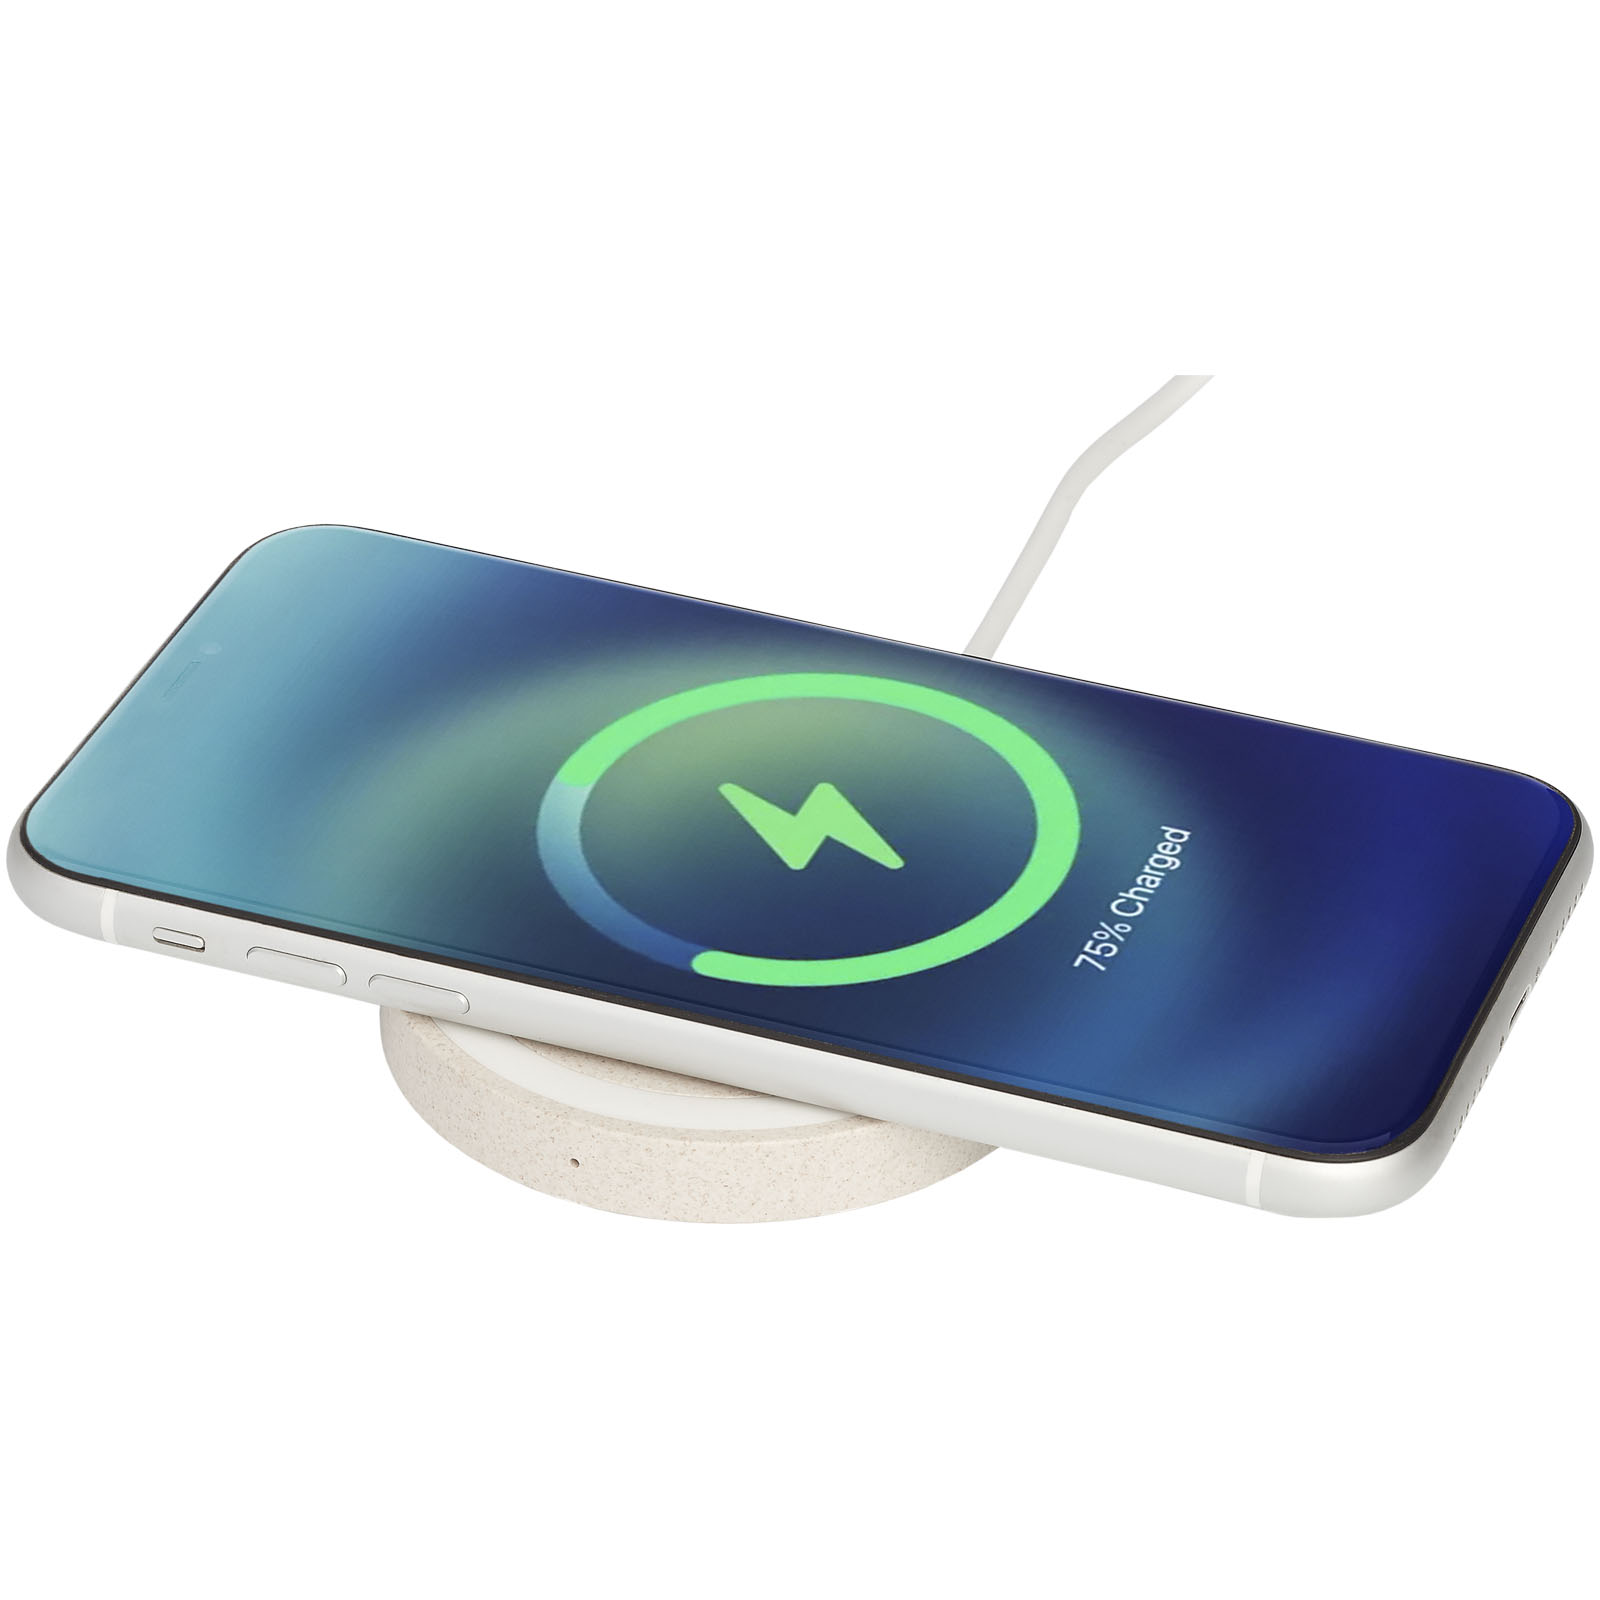 Advertising Wireless Charging - Naka 5W wheat straw wireless charging pad